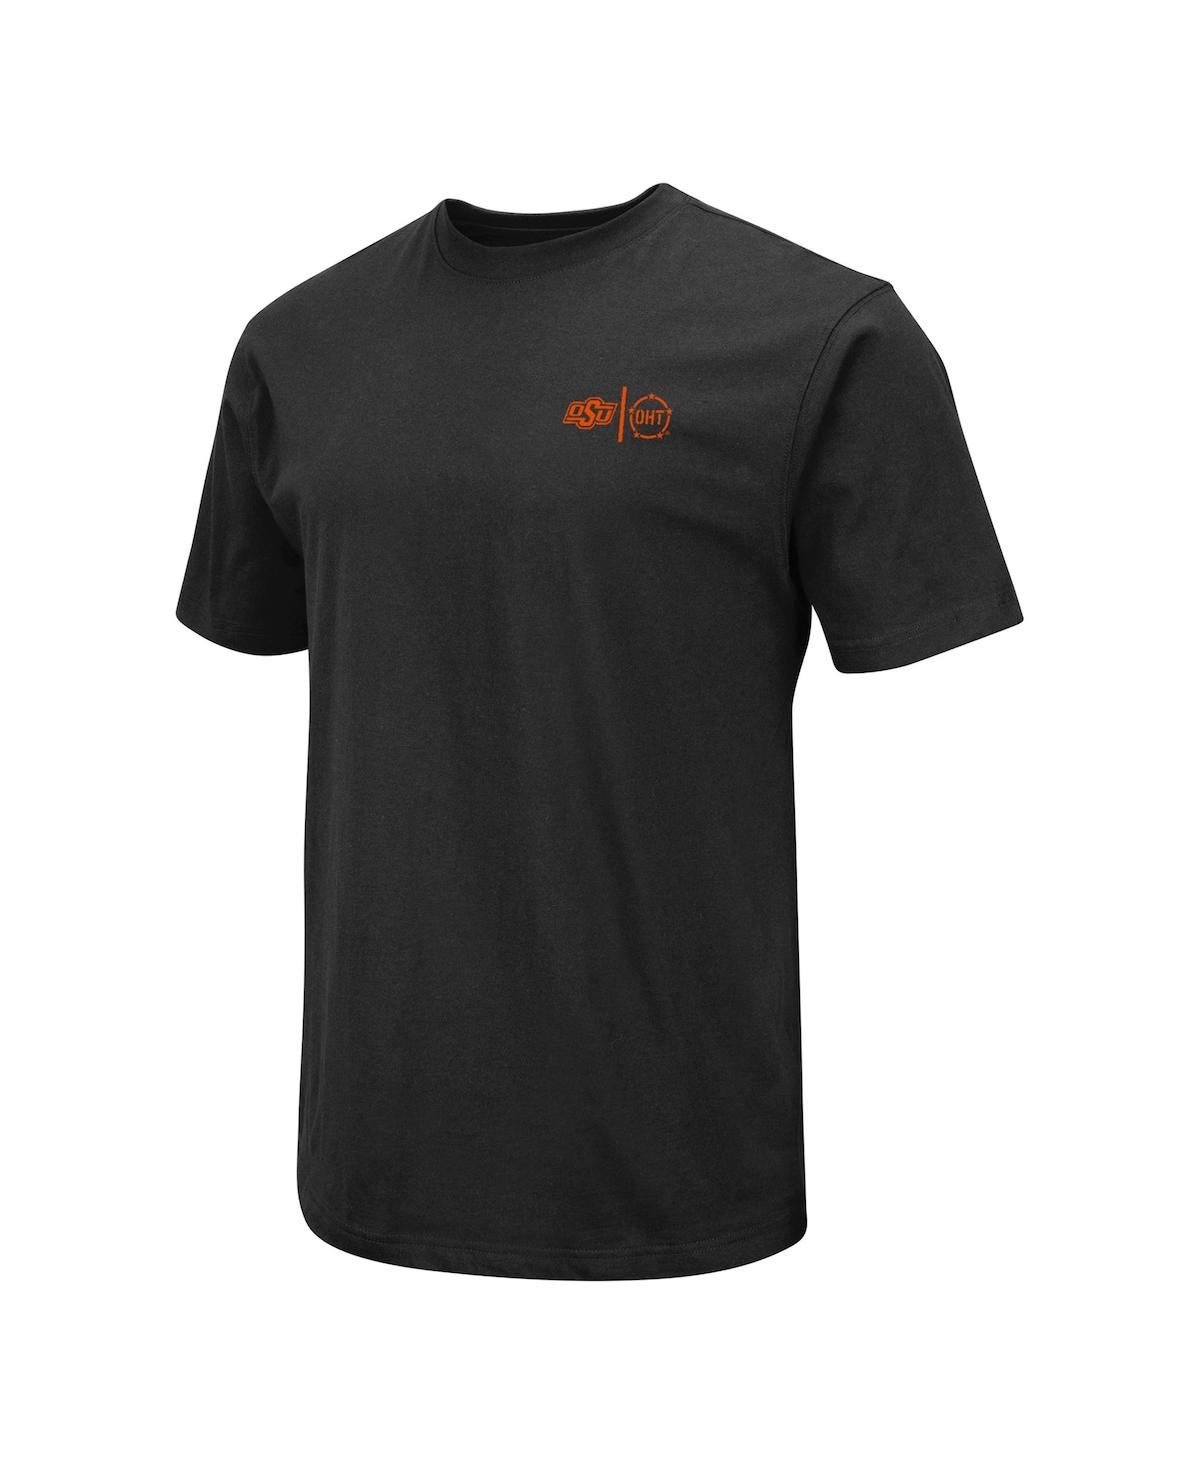 Shop Colosseum Men's  Black Oklahoma State Cowboys Oht Military-inspired Appreciation T-shirt